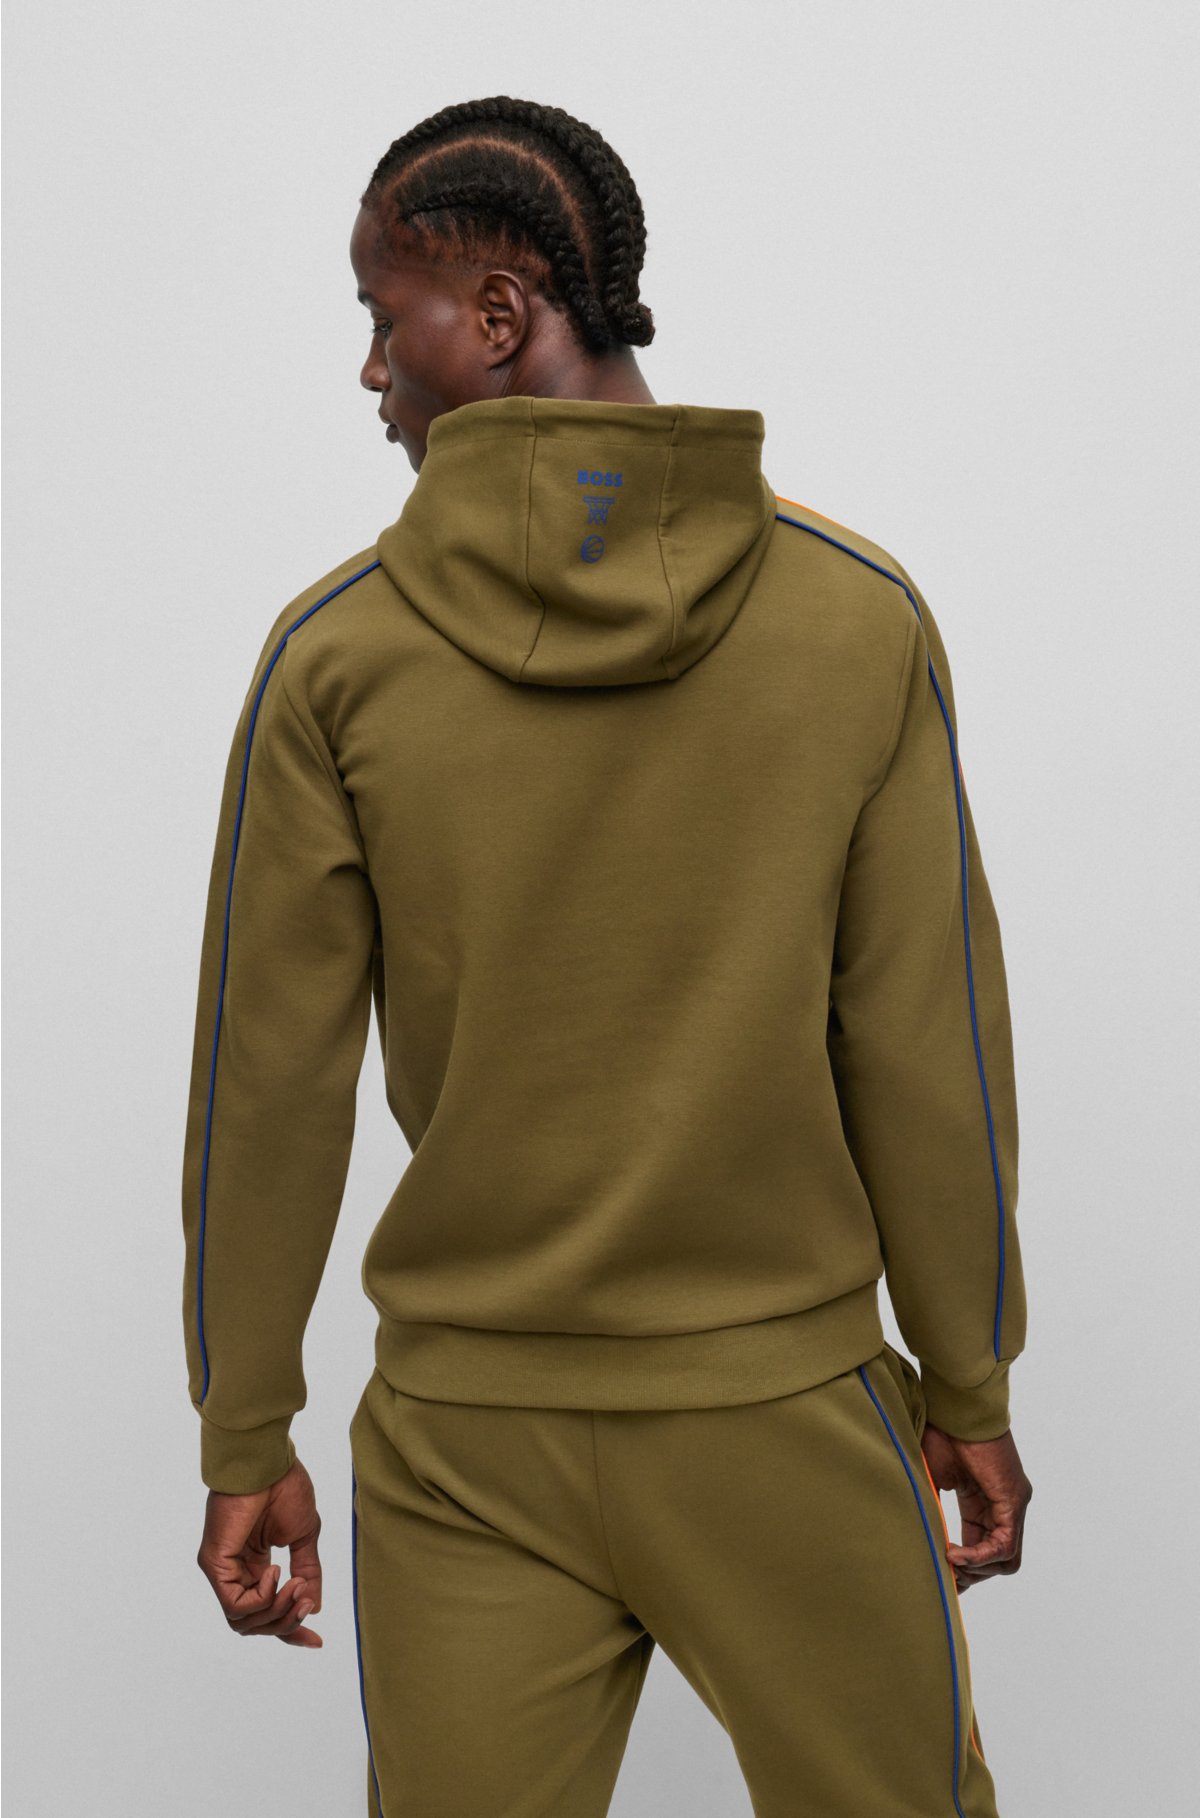 Hugo Boss Boss & Nba Hooded Sweatshirt With Dual Branding- Nba Warriors  Men's Sweatshirts Size M